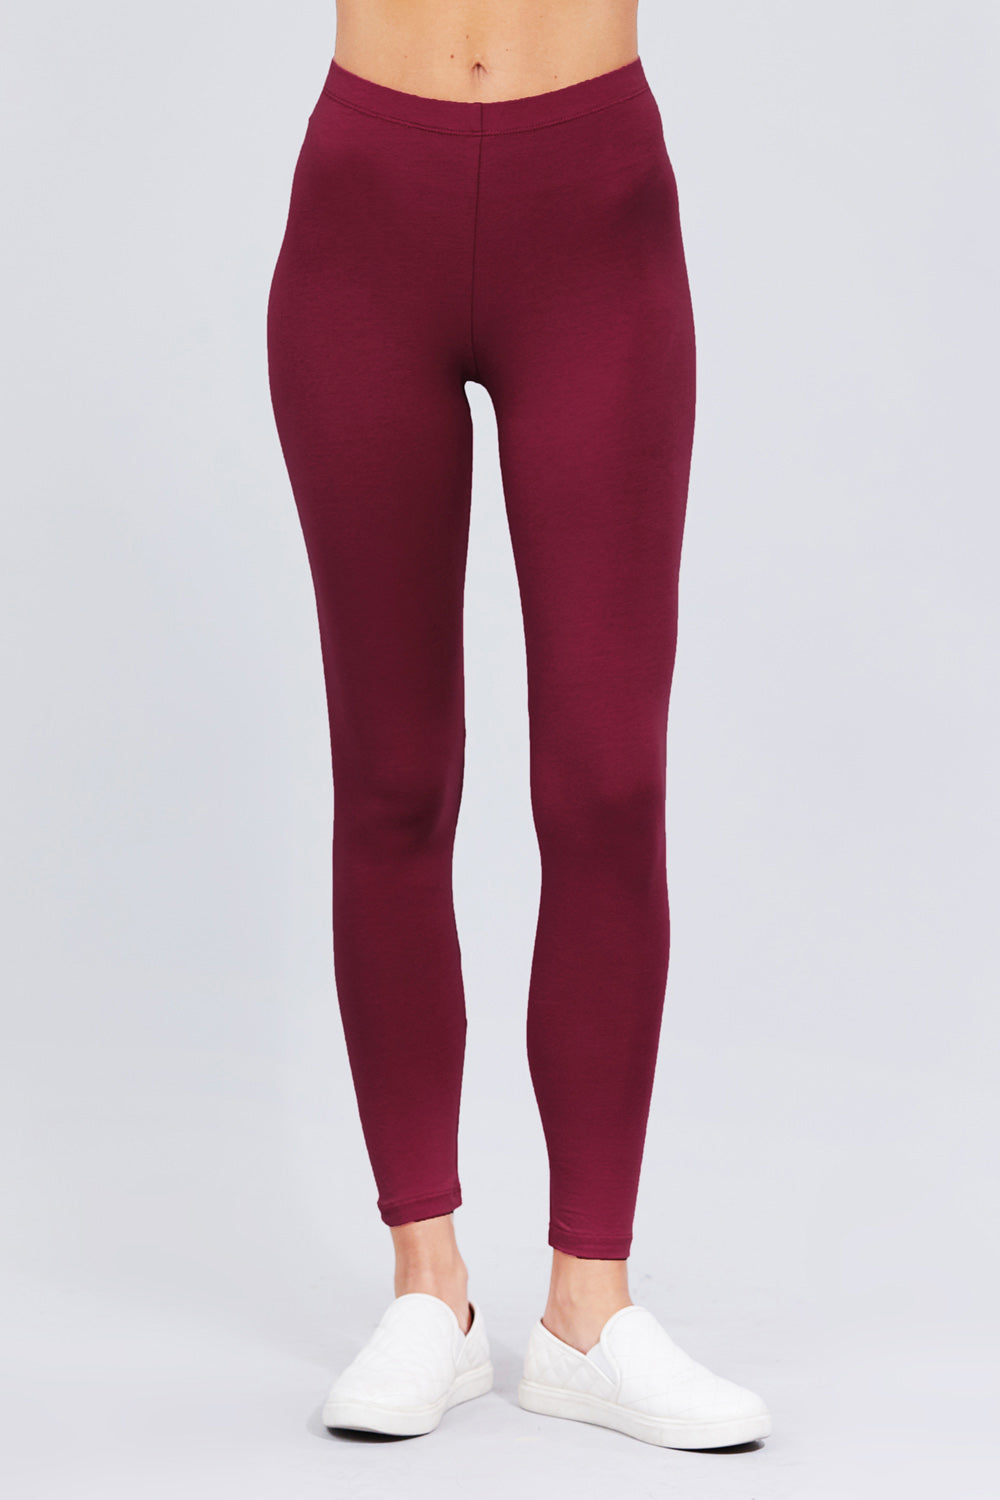 LVGS High Waist Women Leggings – Full Length Yoga Pants & Compression  Tights (3X, Burgundy)